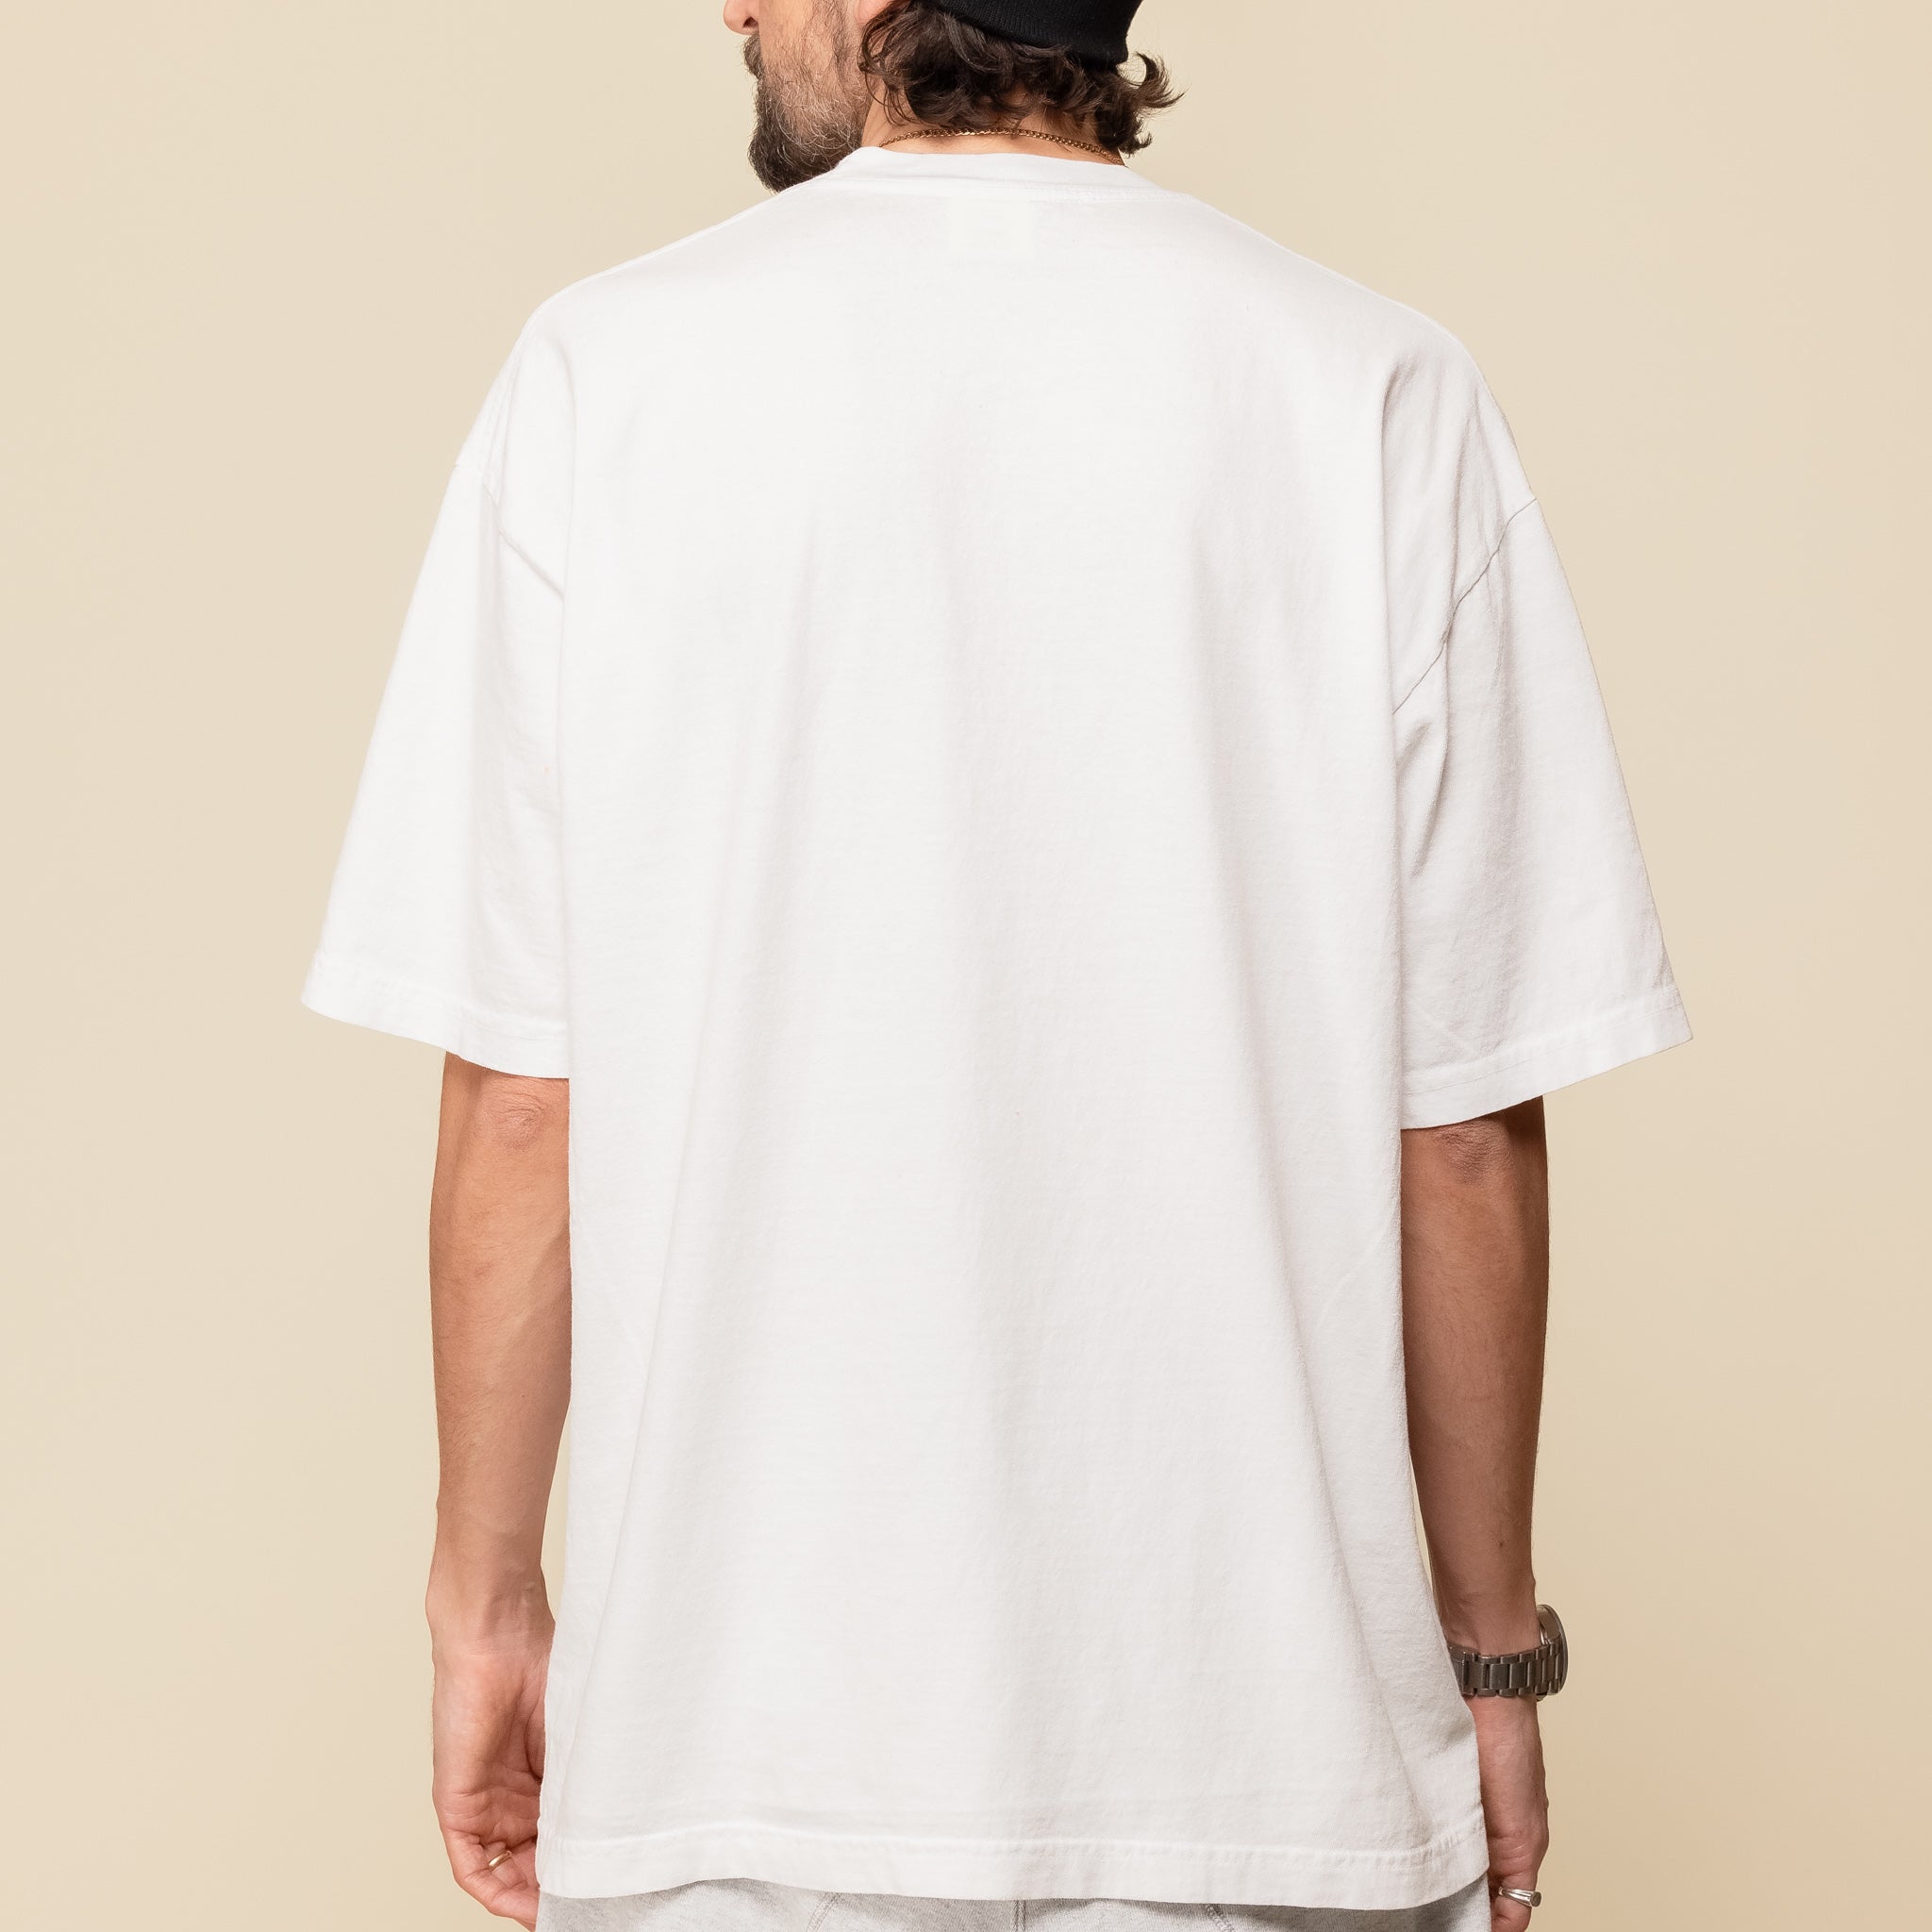 Cease - Shoulder Print T-Shirt -White "ceaseceasecease.com" "ceaseceasecease" "cease stockist" "dan pacitti"